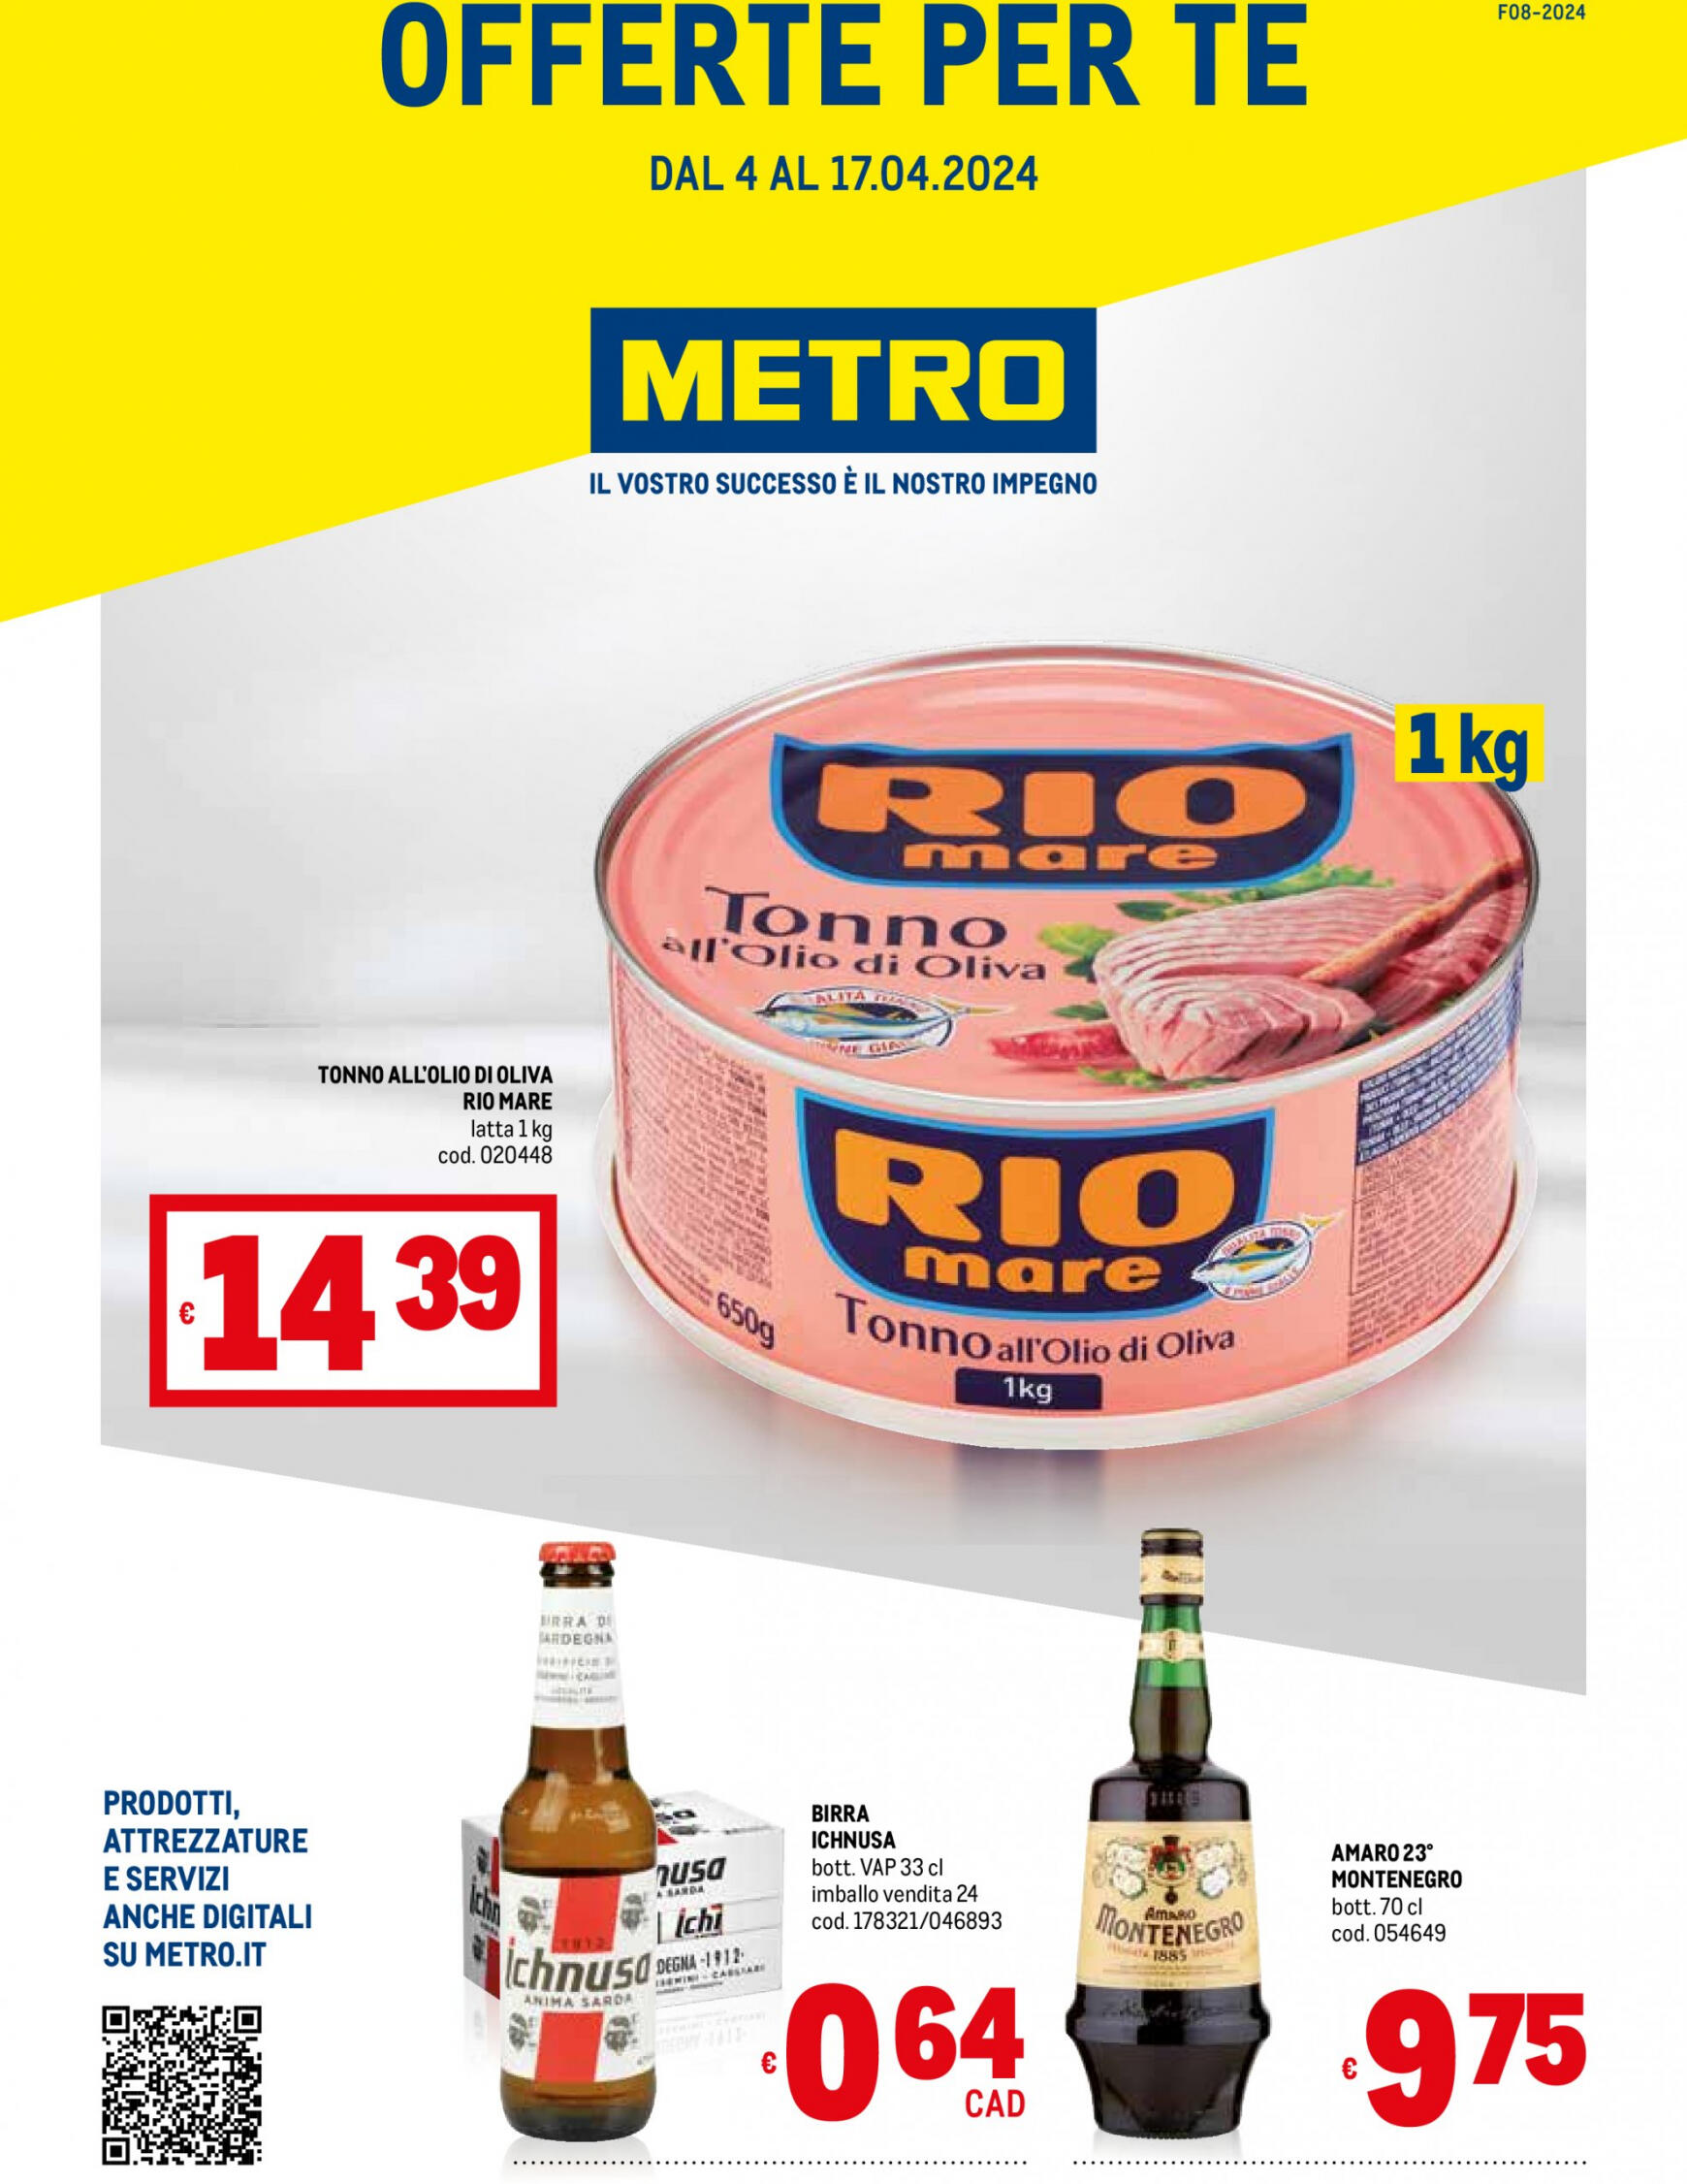 metro - Nuovo volantino Metro - Offerte per te 04.04. - 17.04.